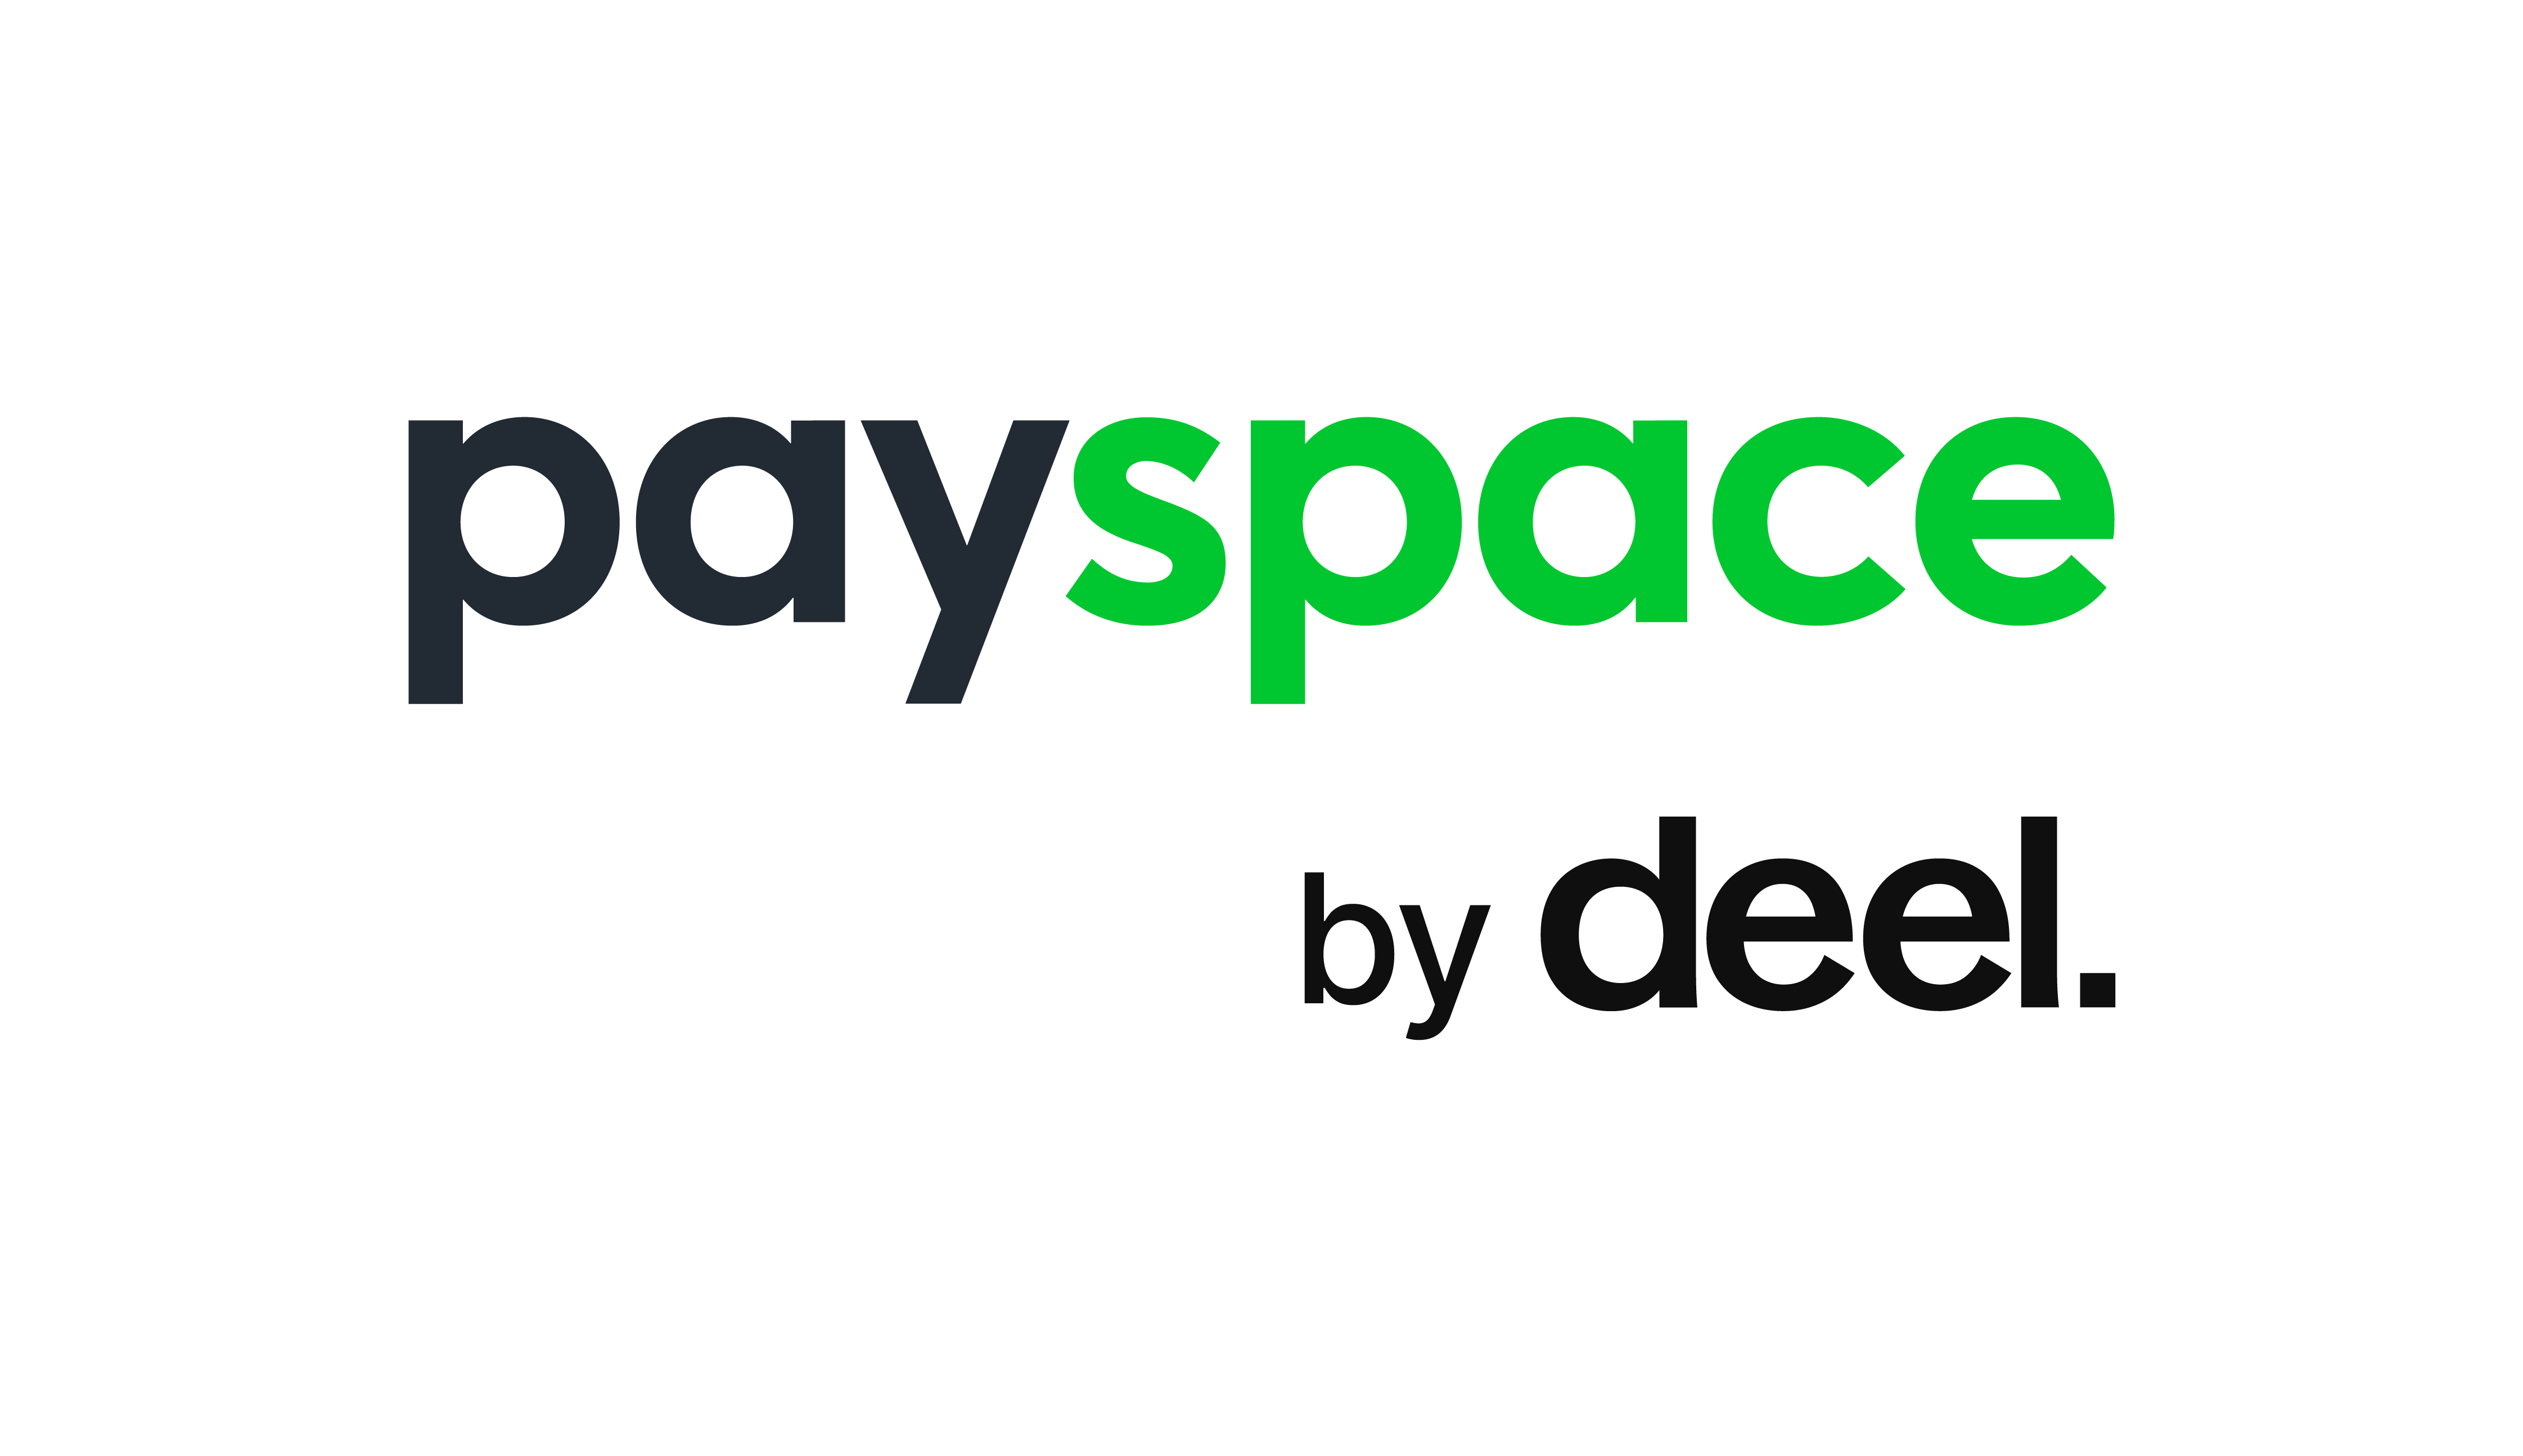 Payspace by deel logo lockup